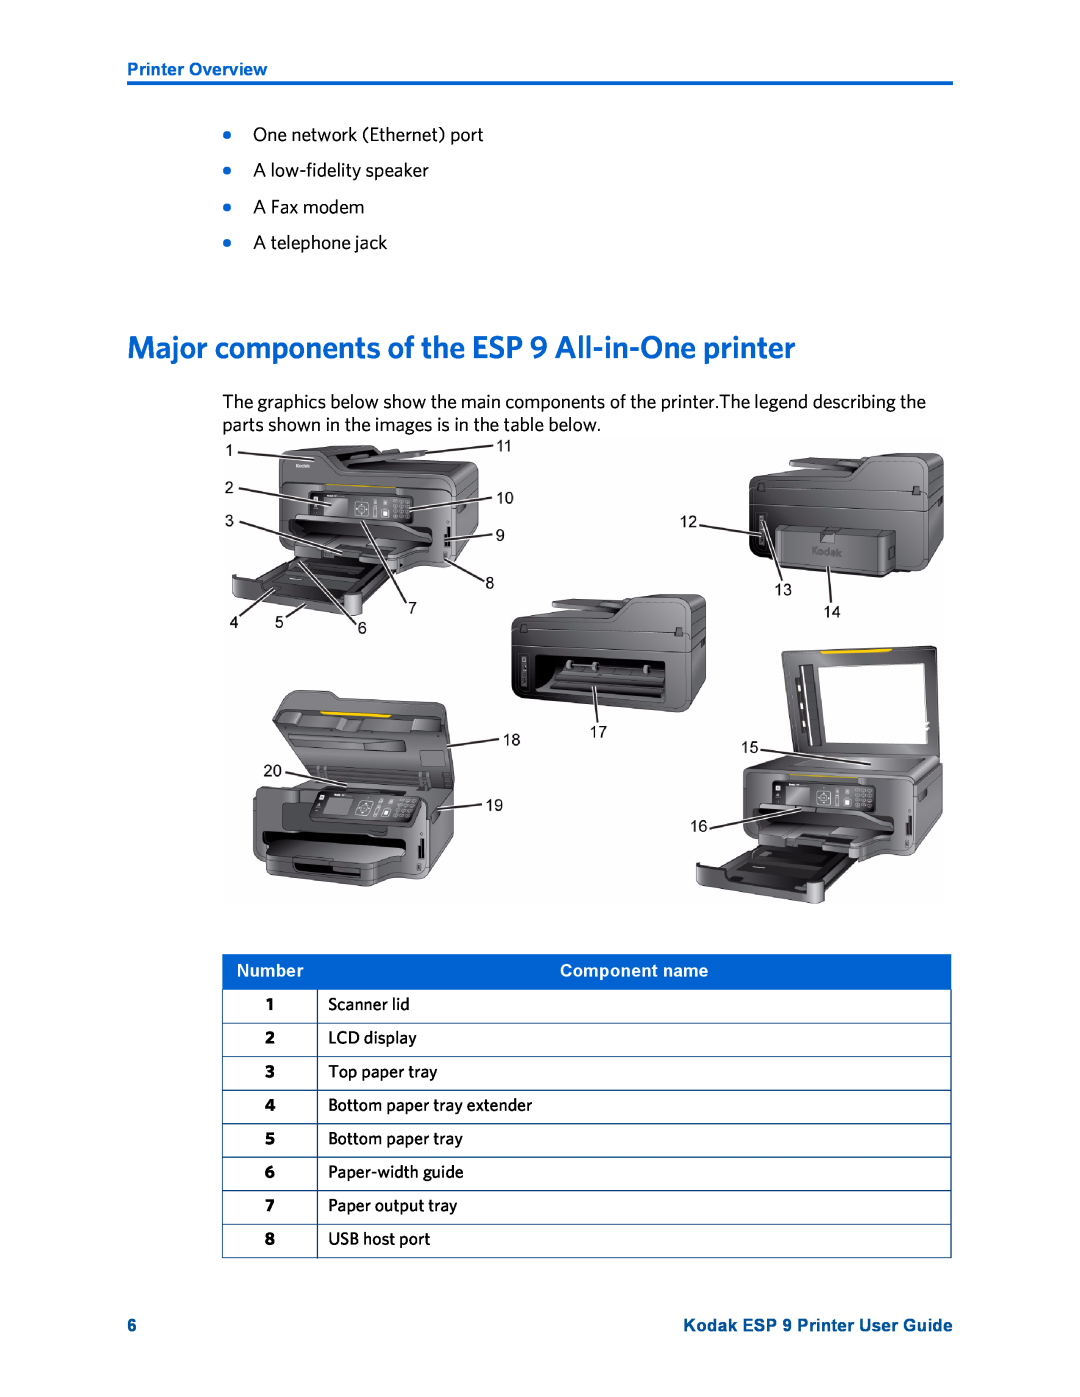 Kodak manual Major components of the ESP 9 All-in-One printer 